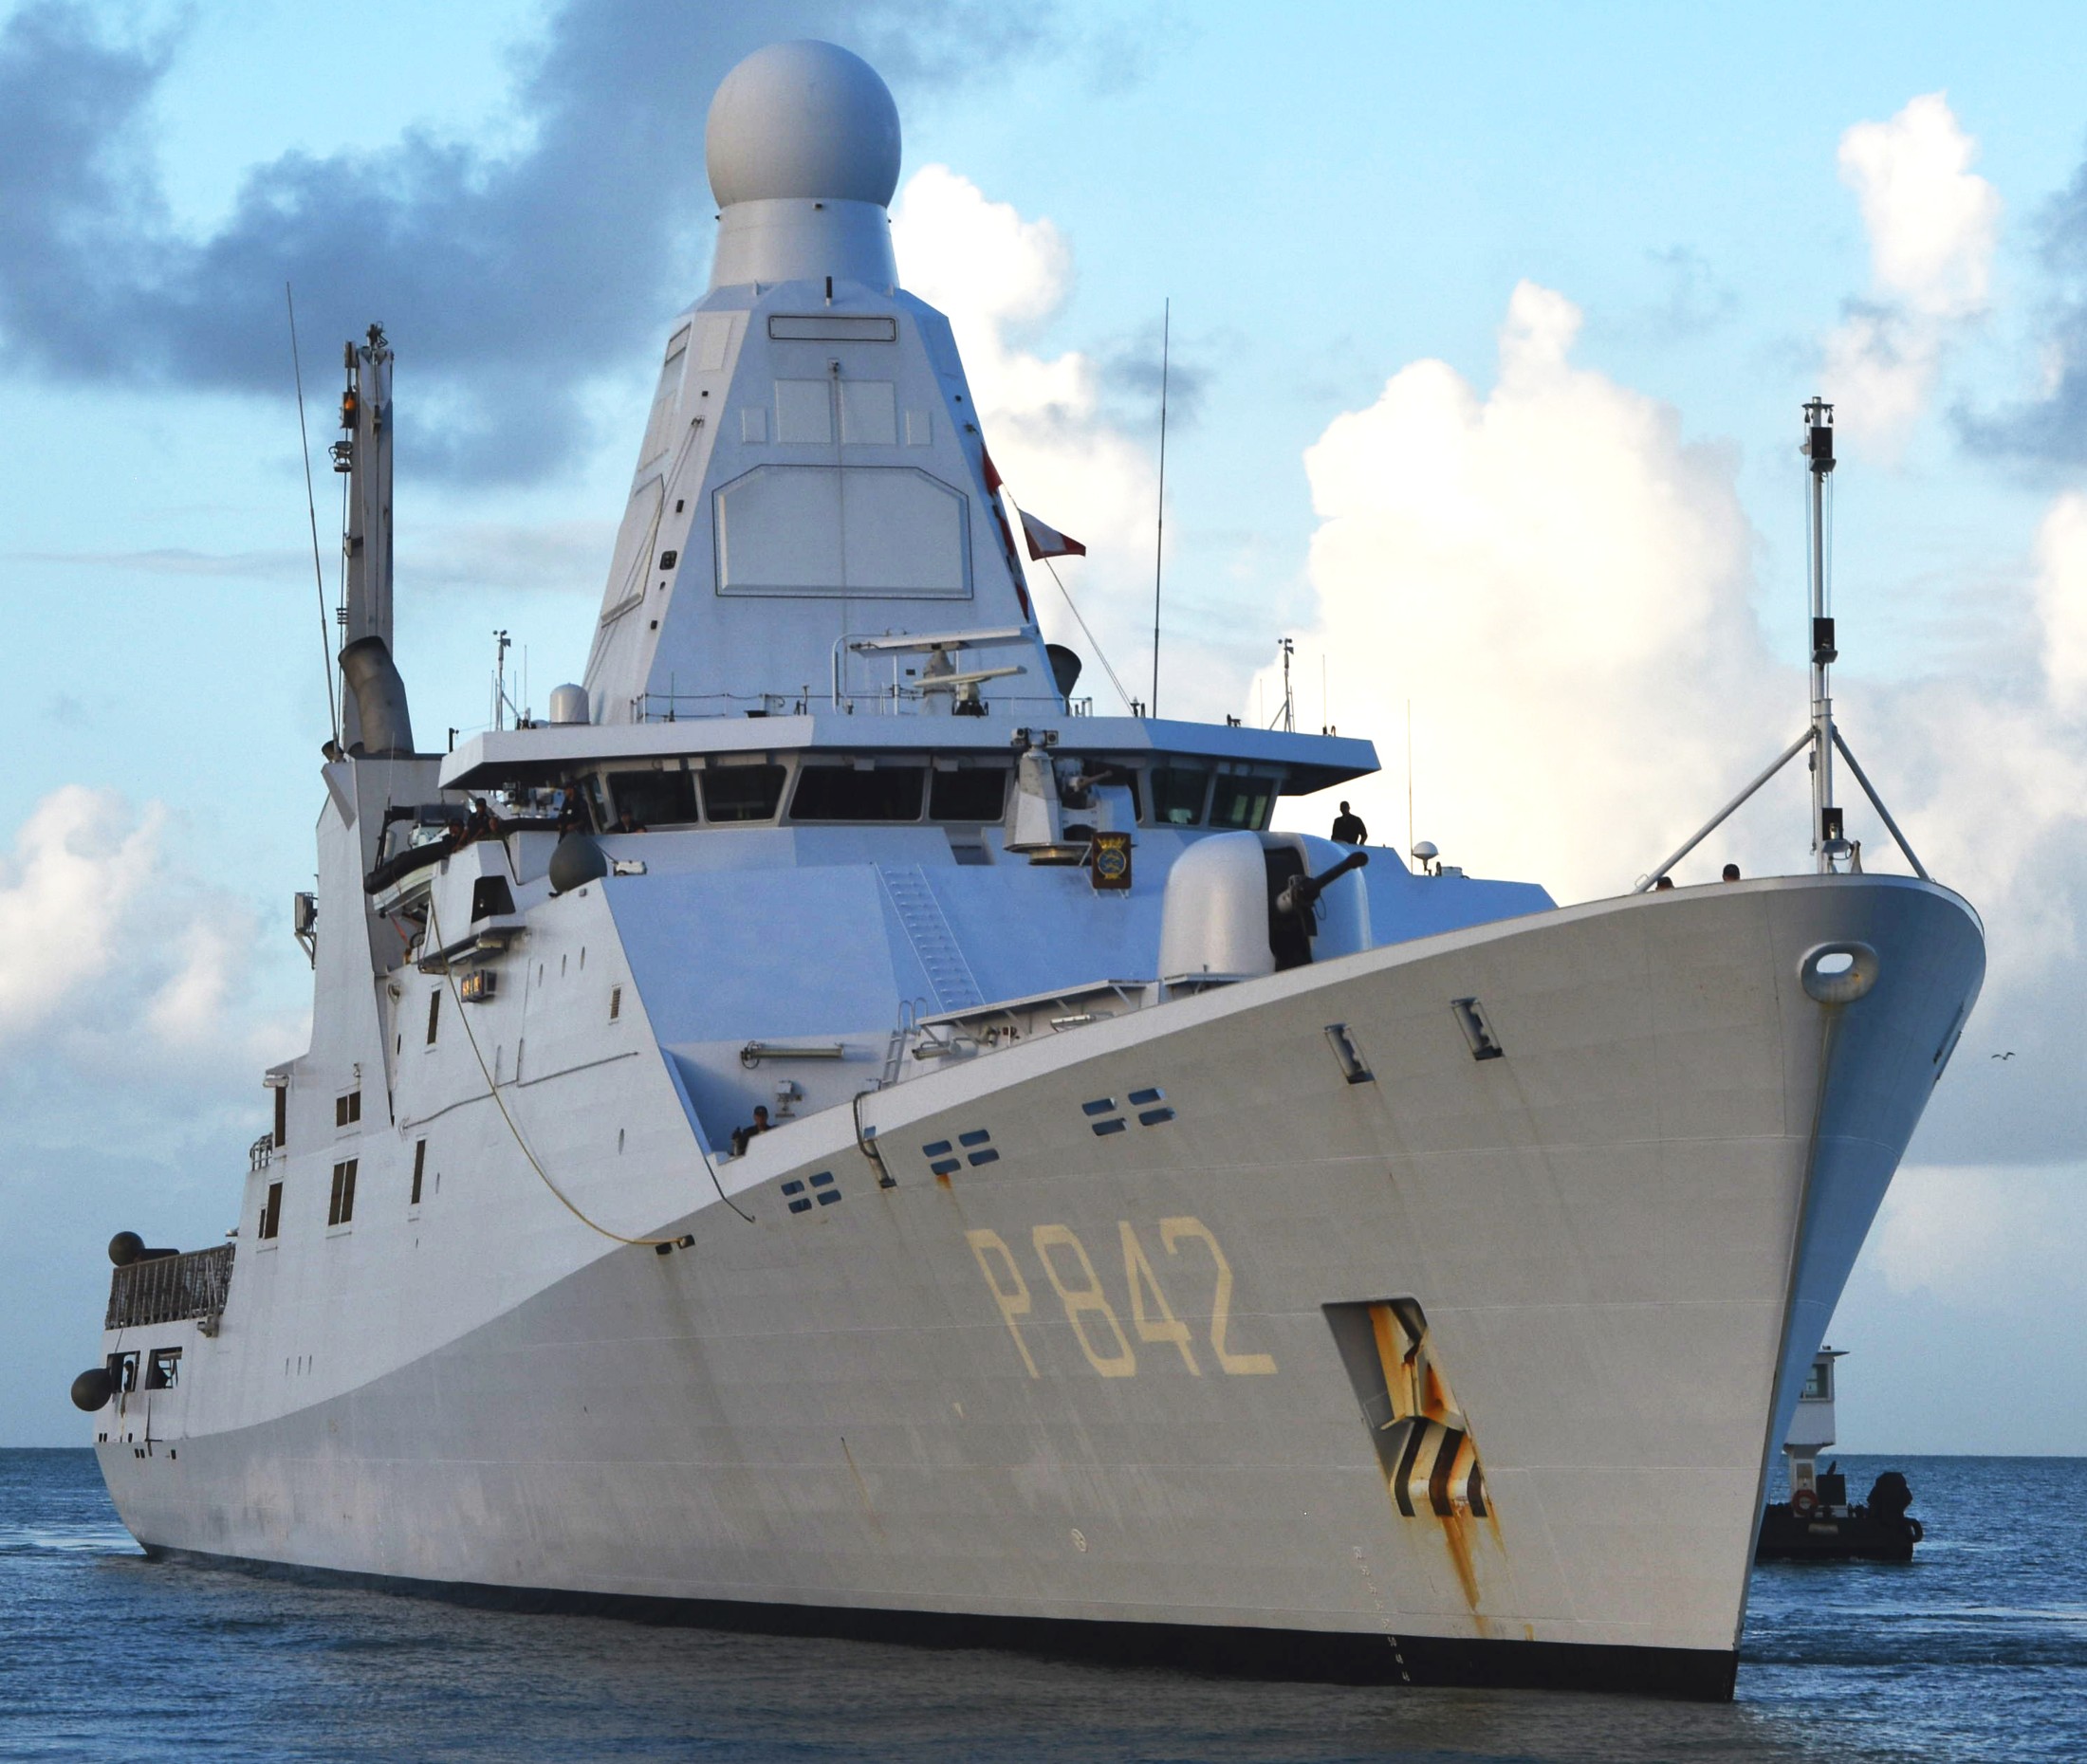 p-842 hnlms friesland holland class offshore patrol vessel opv royal netherlands navy 05